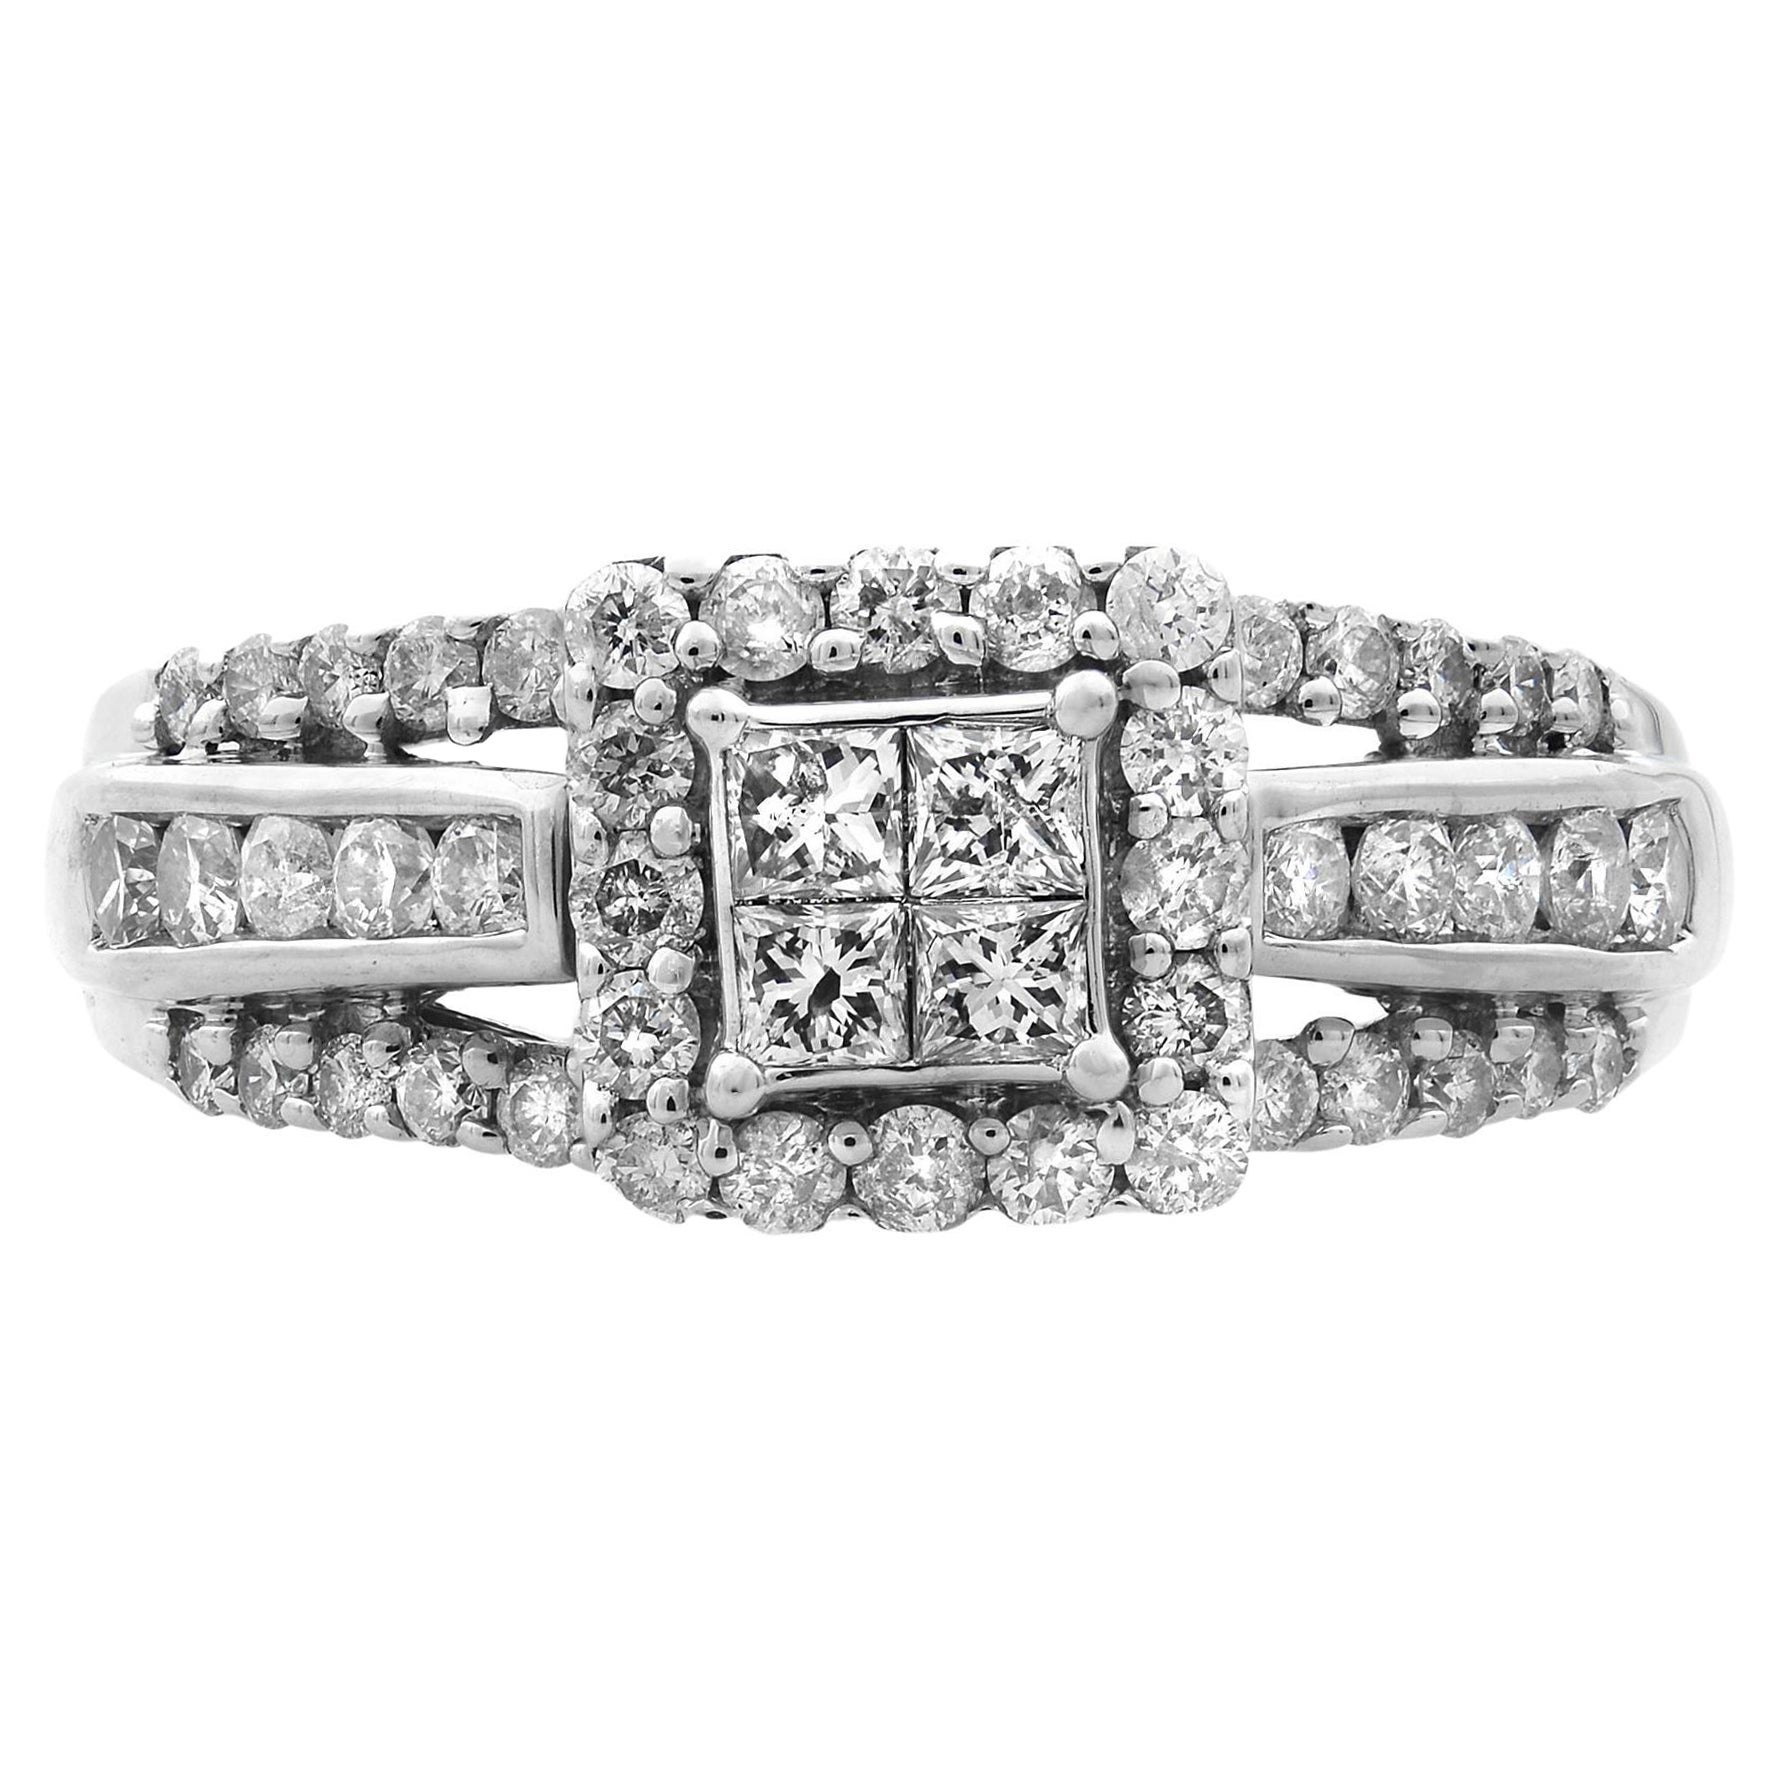 Rachel Koen Diamond Ladies Wedding Ring 14K White Gold 1.25cttw For Sale